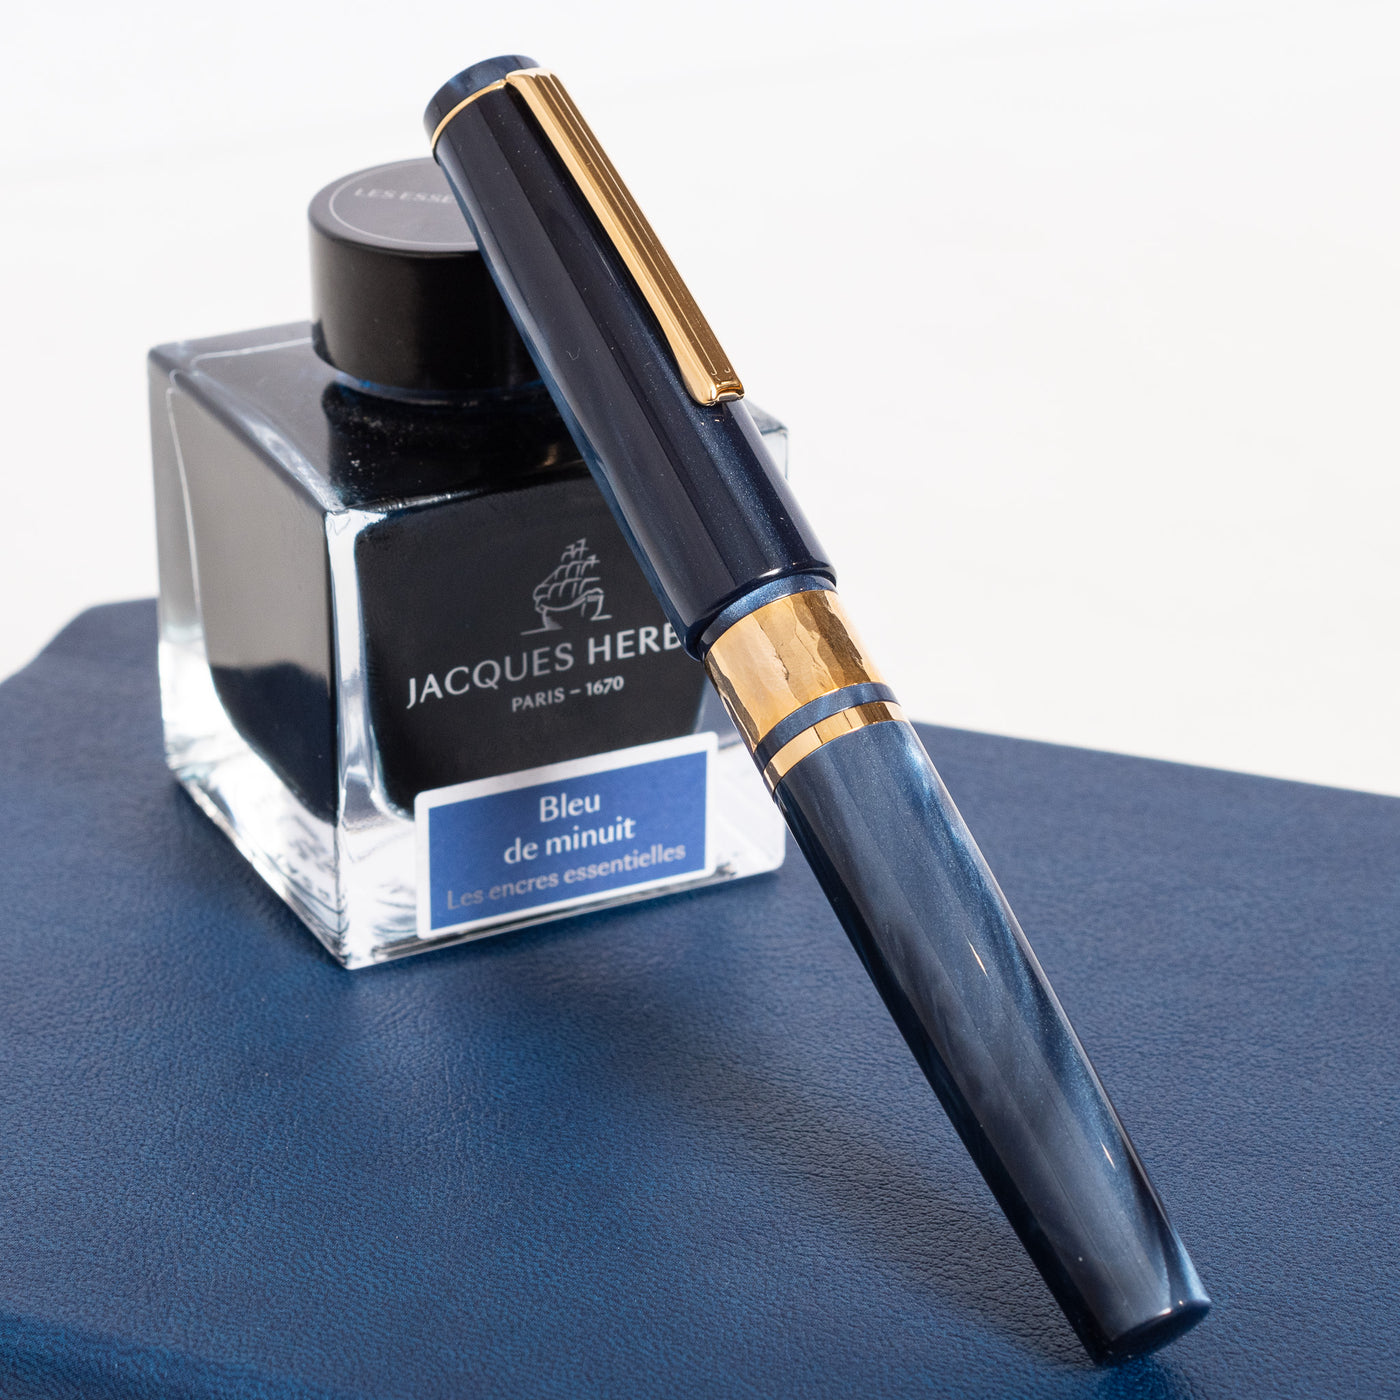 Esterbrook Model J Fountain Pen - Capri Blue resin